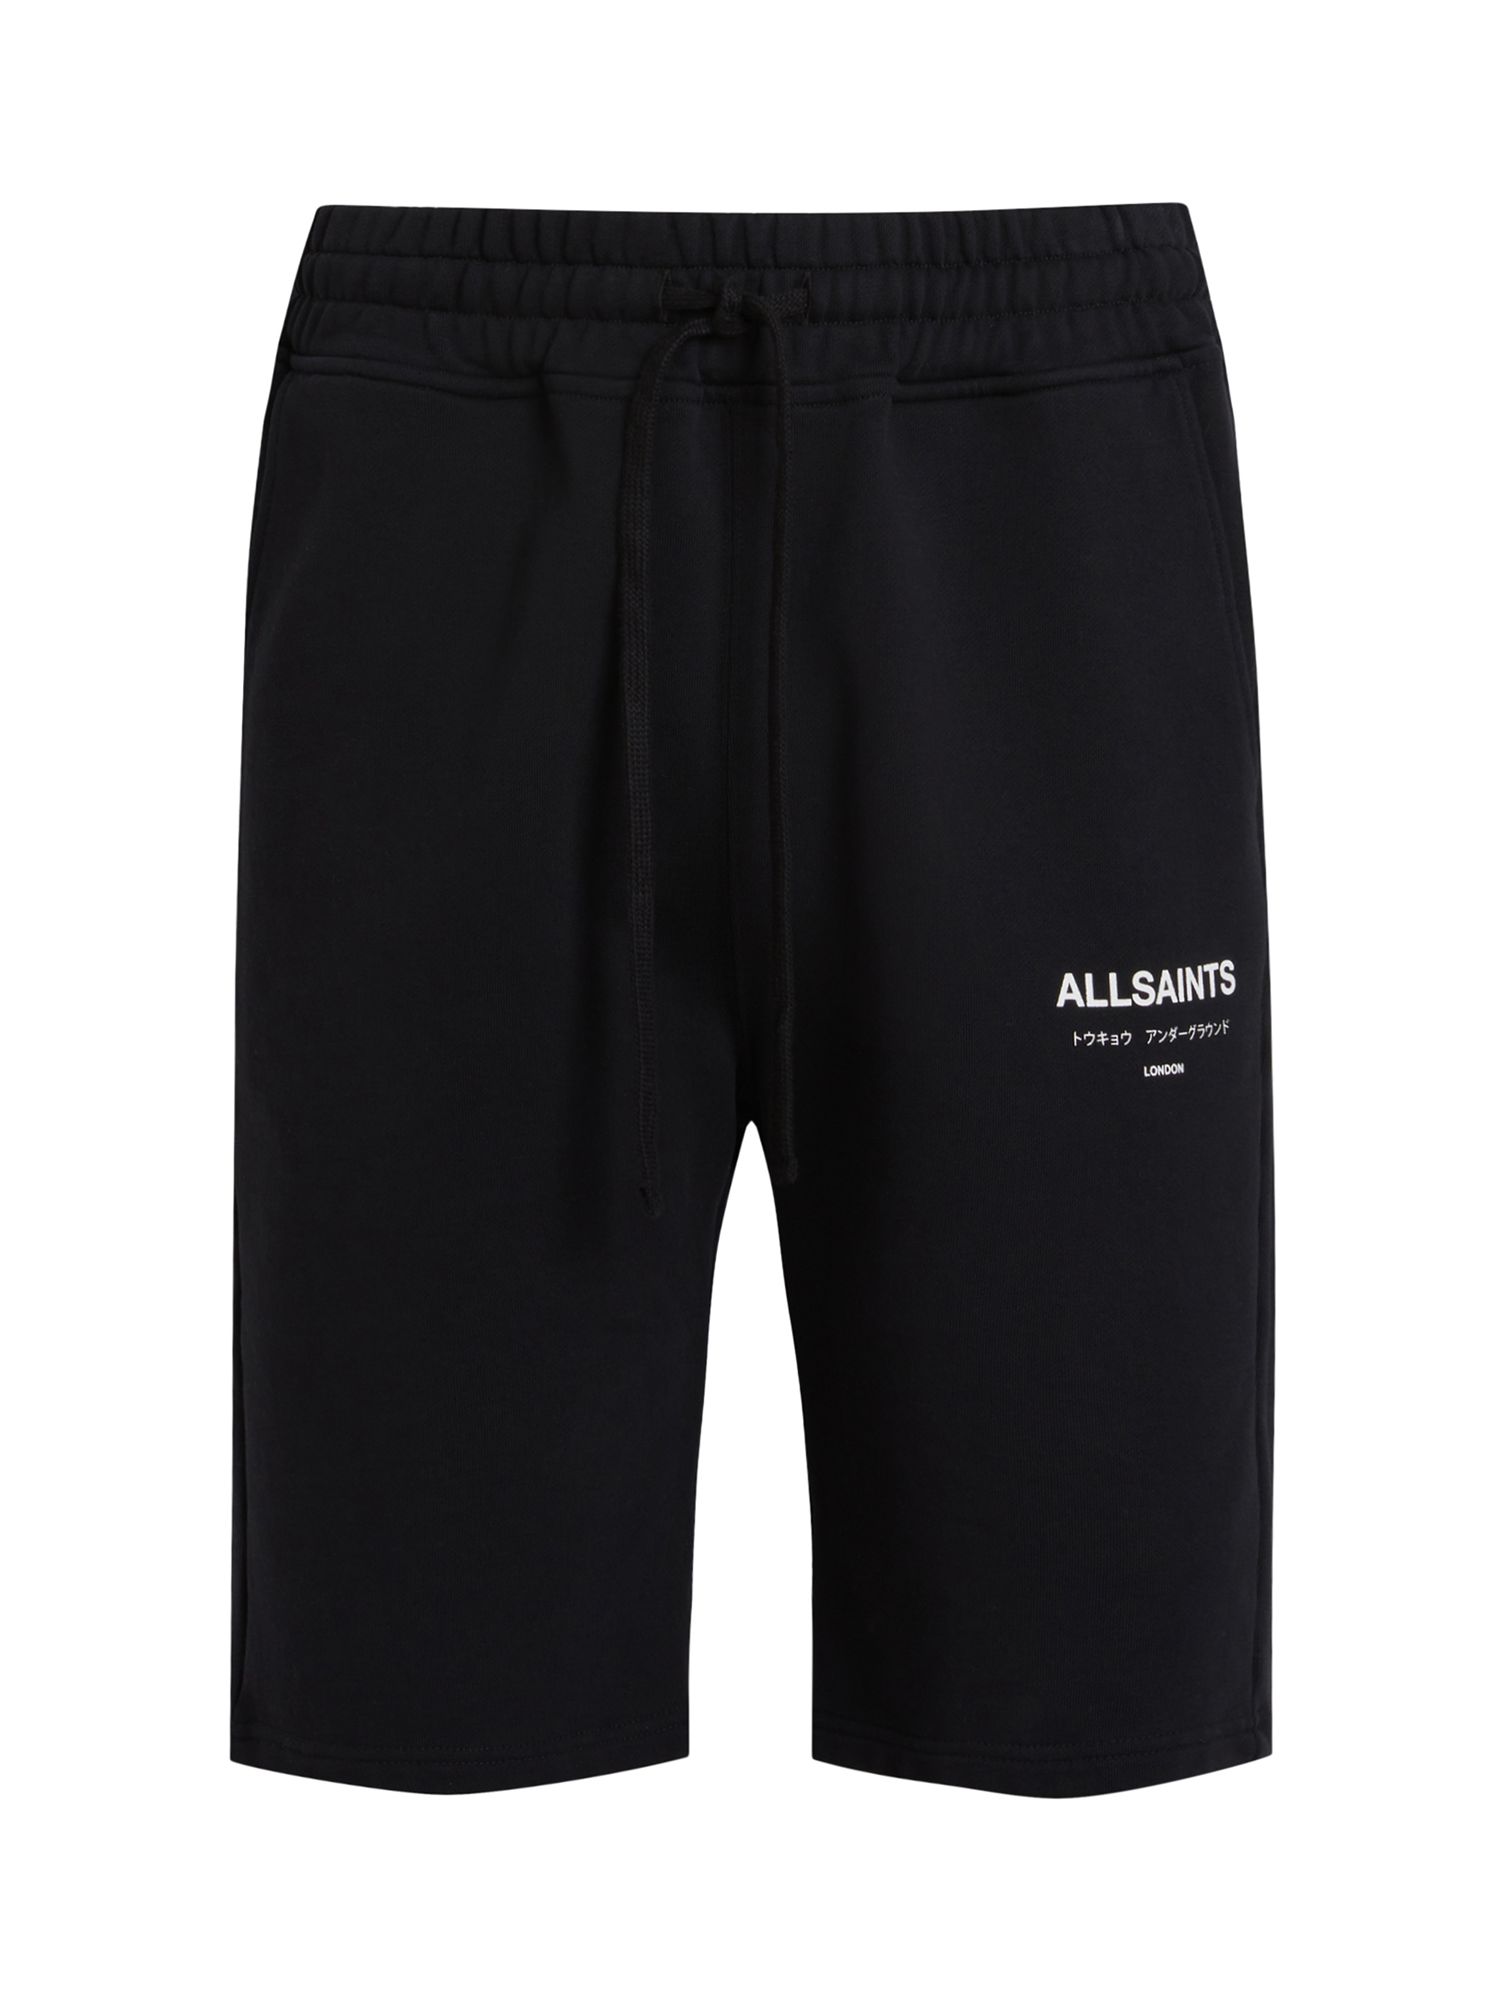 Buy AllSaints Organic Cotton Underground Sweat Shorts Online at johnlewis.com